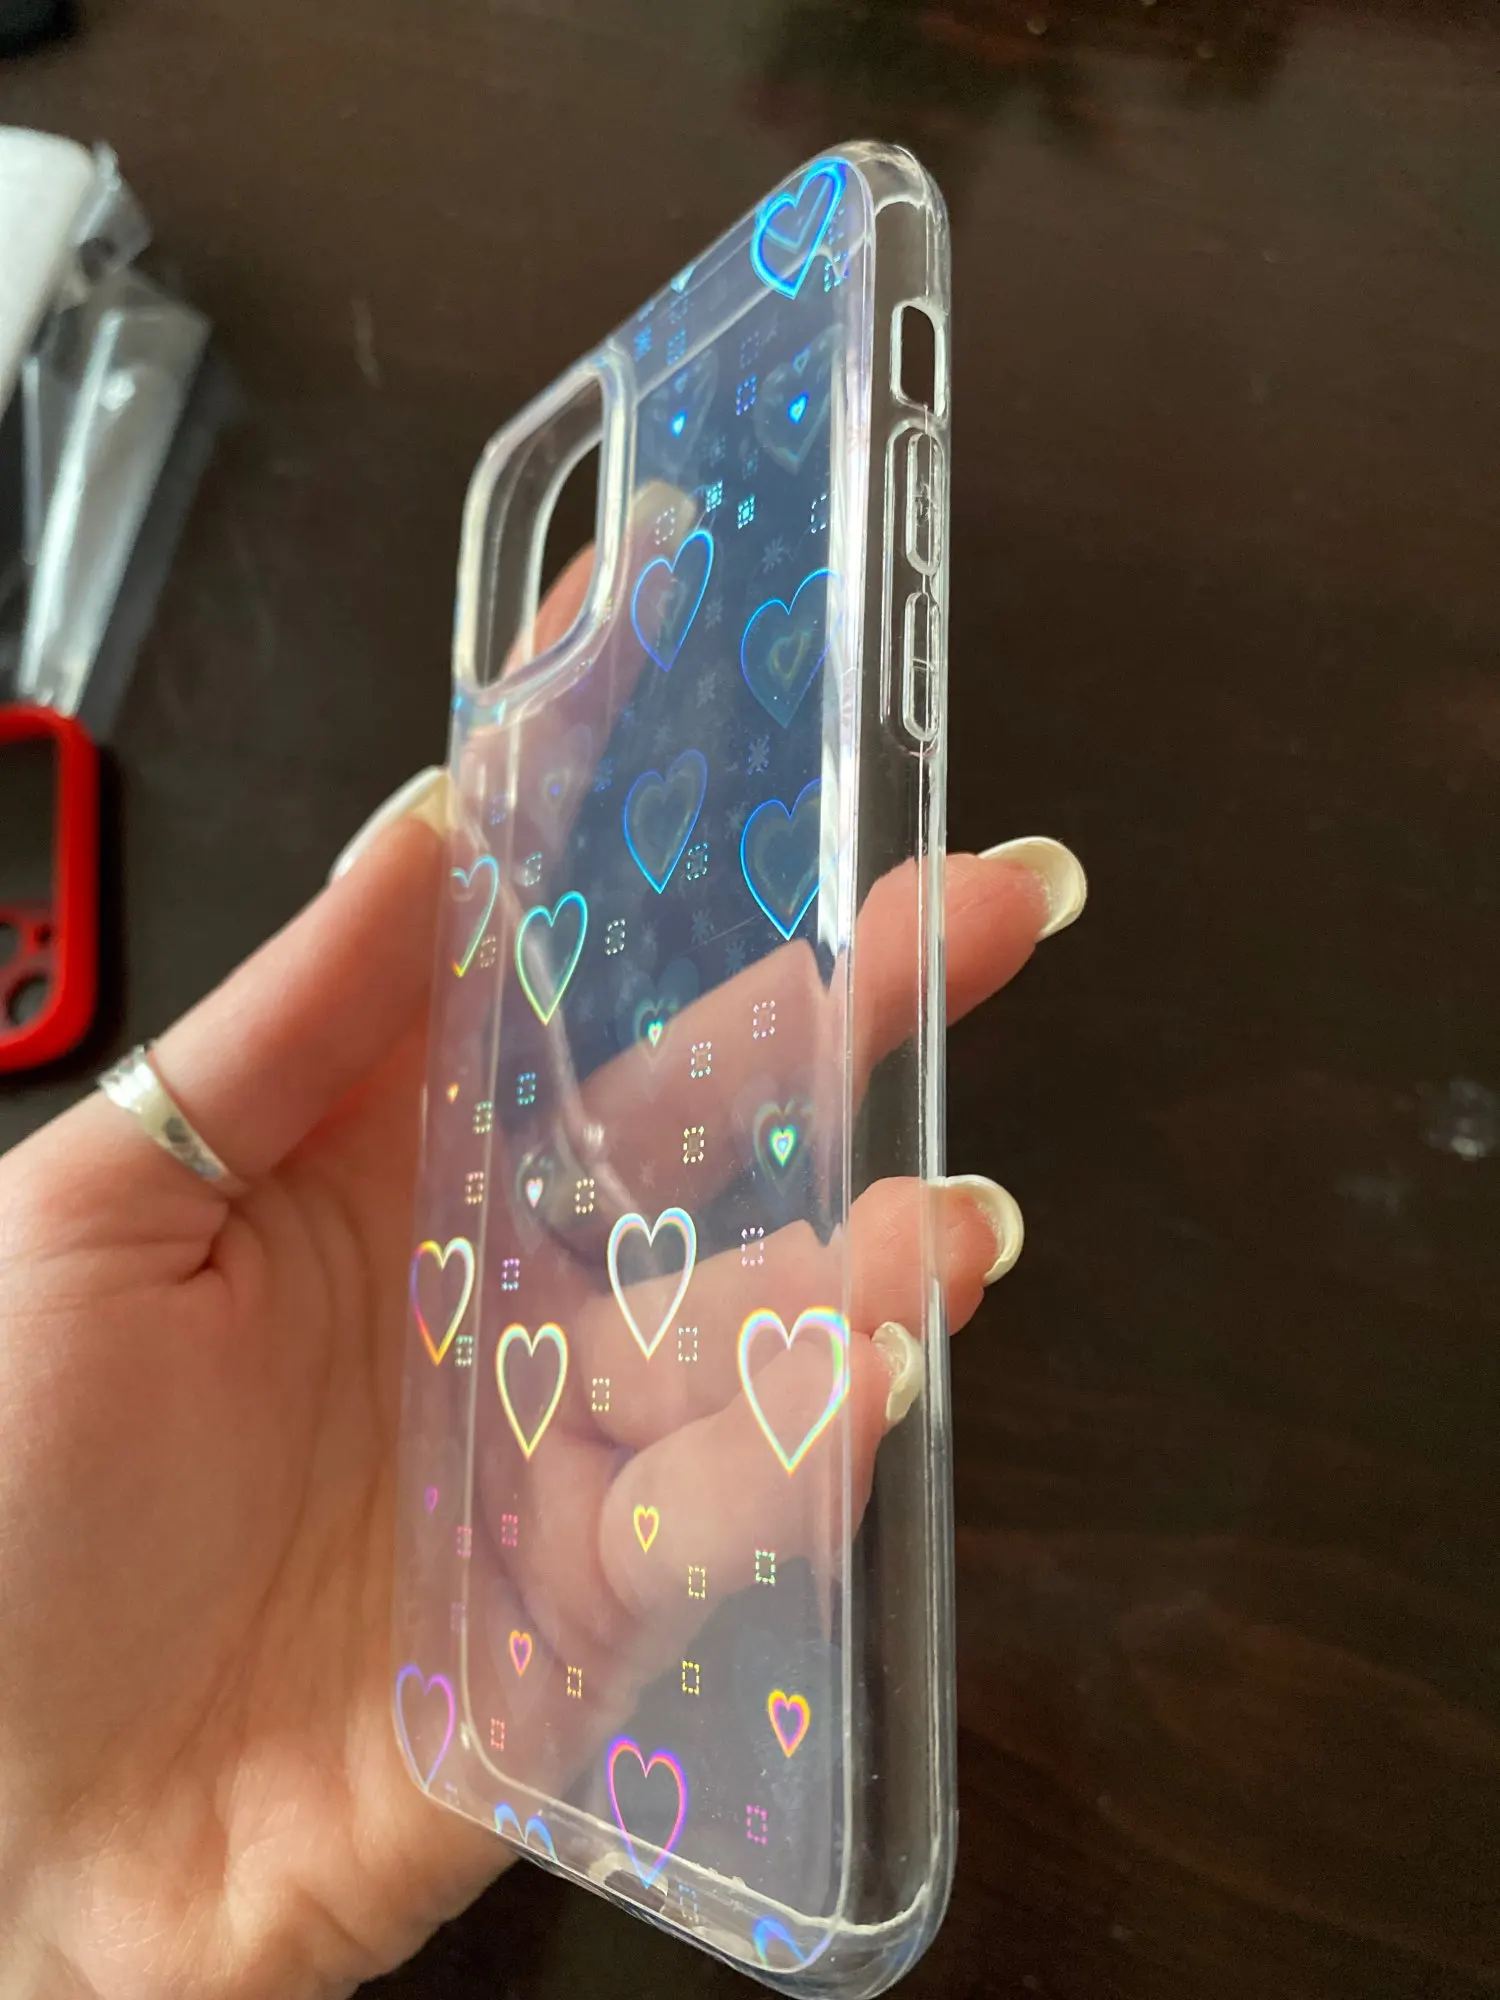 Korea Holographic Hearts iPhone Case